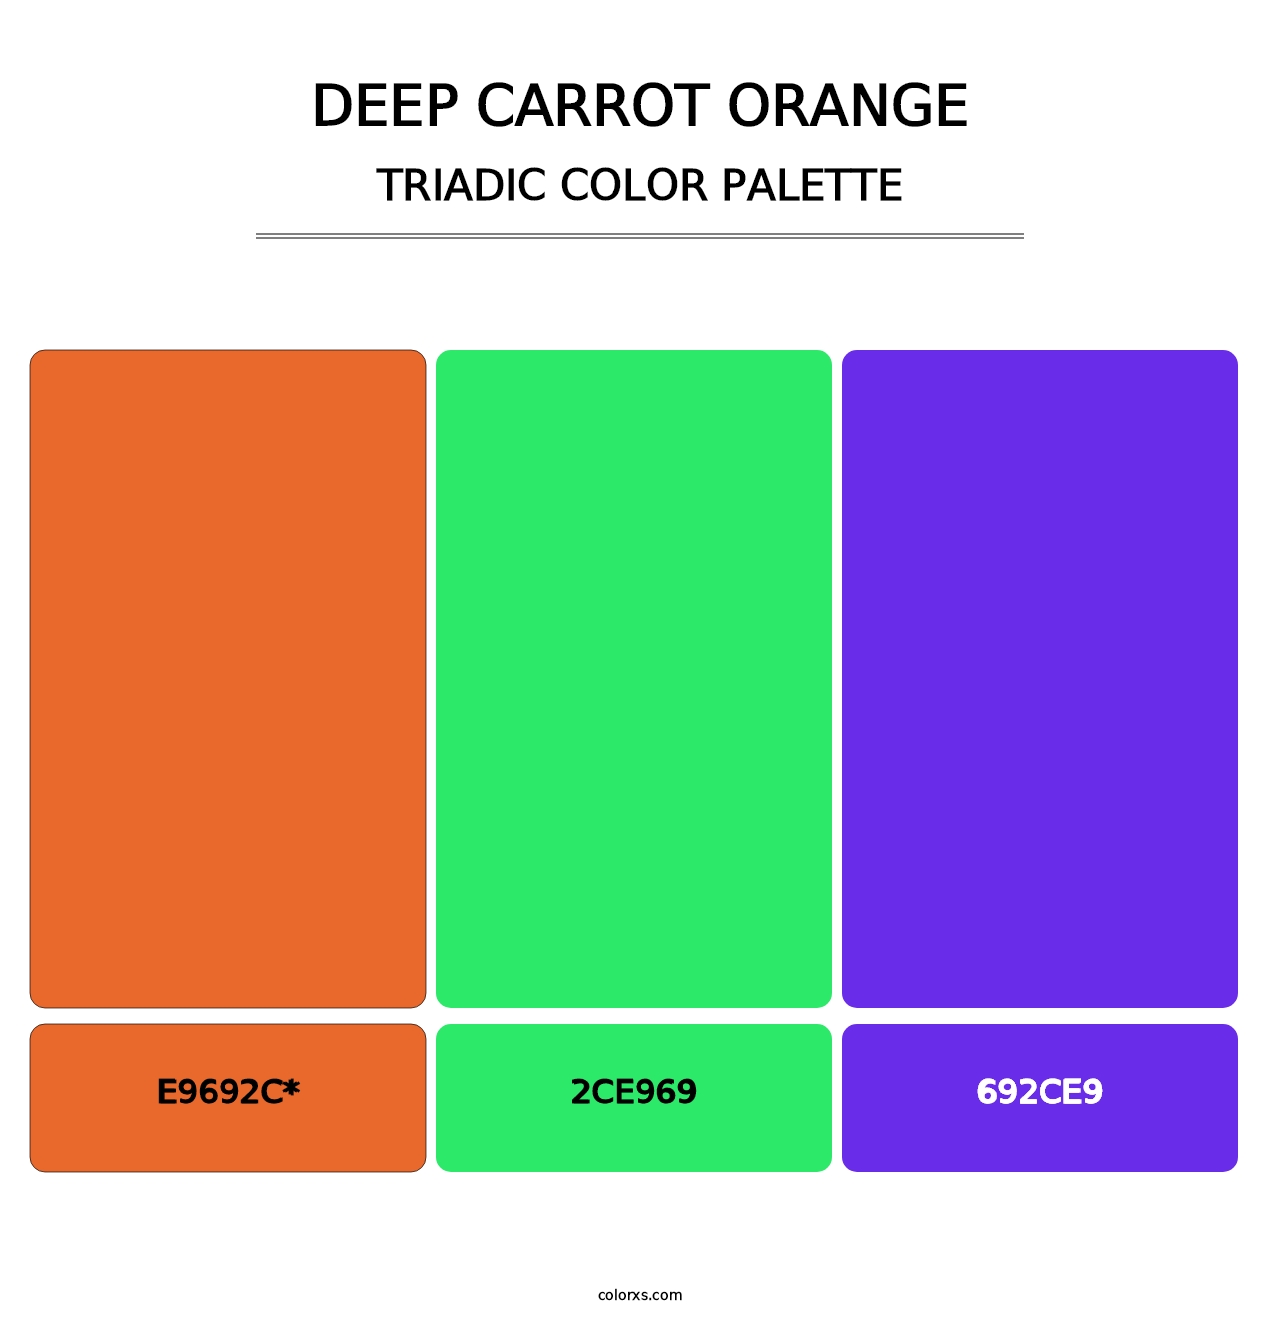 Deep Carrot Orange - Triadic Color Palette